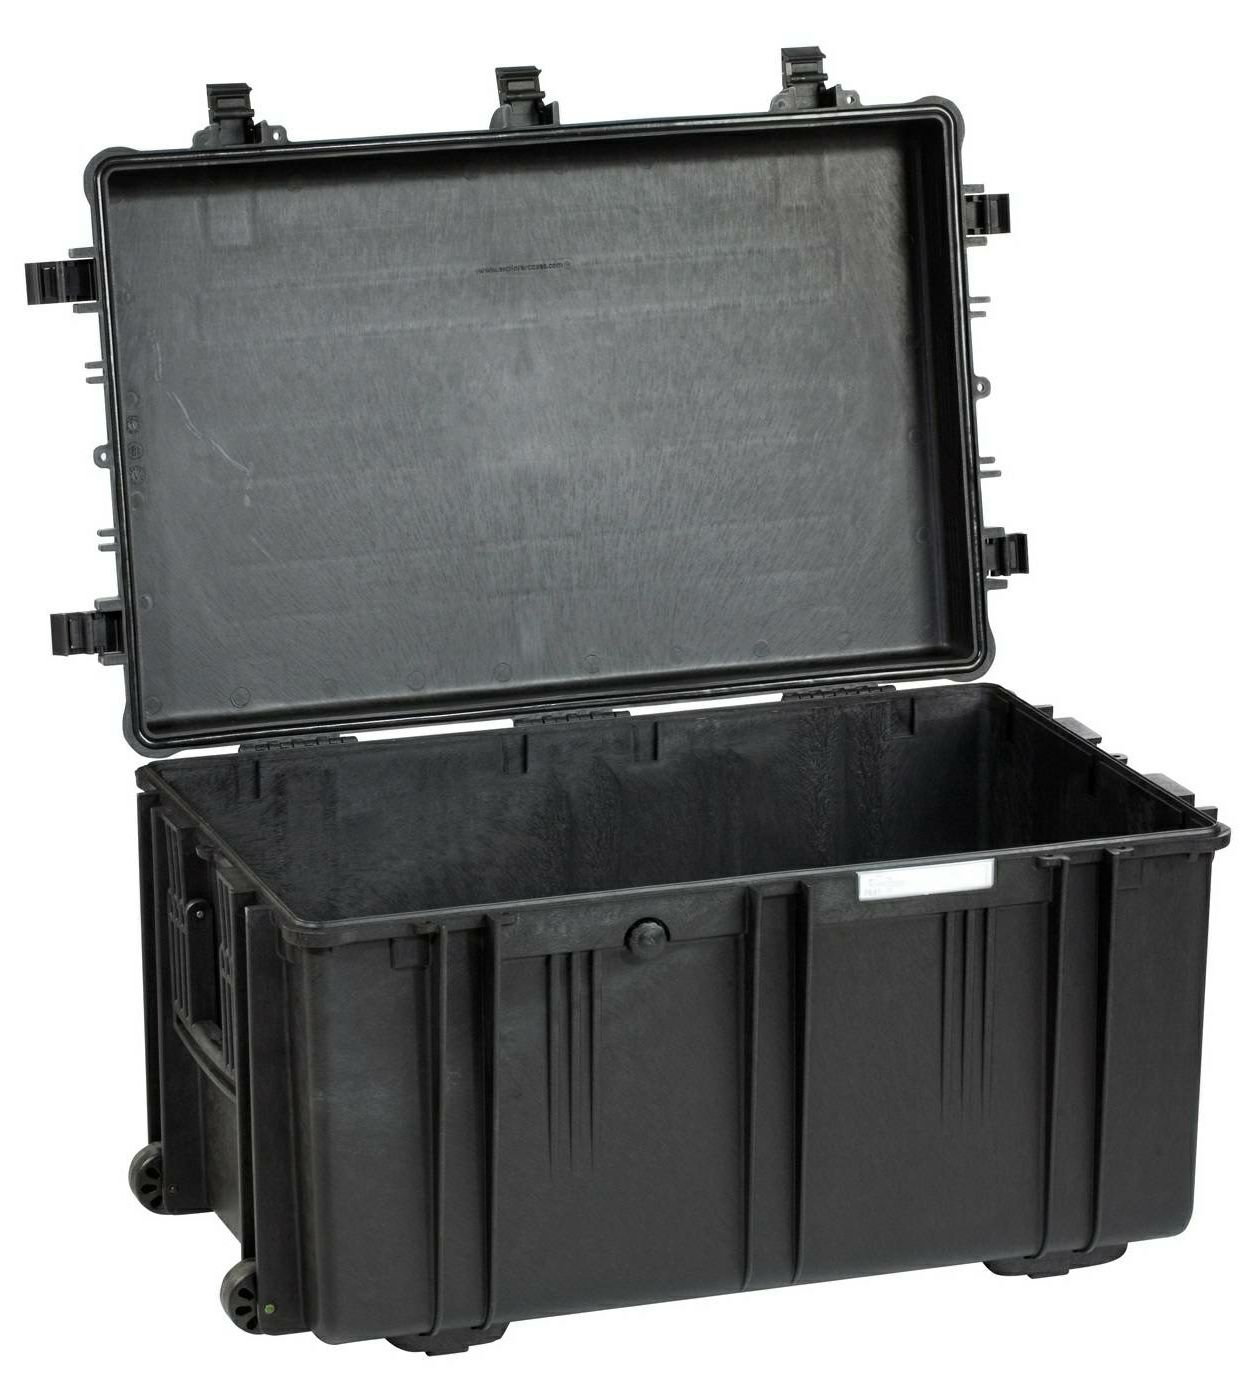 Explorer Cases 7641 Black 860x560x460mm kufer za foto opremu kofer Camera Case